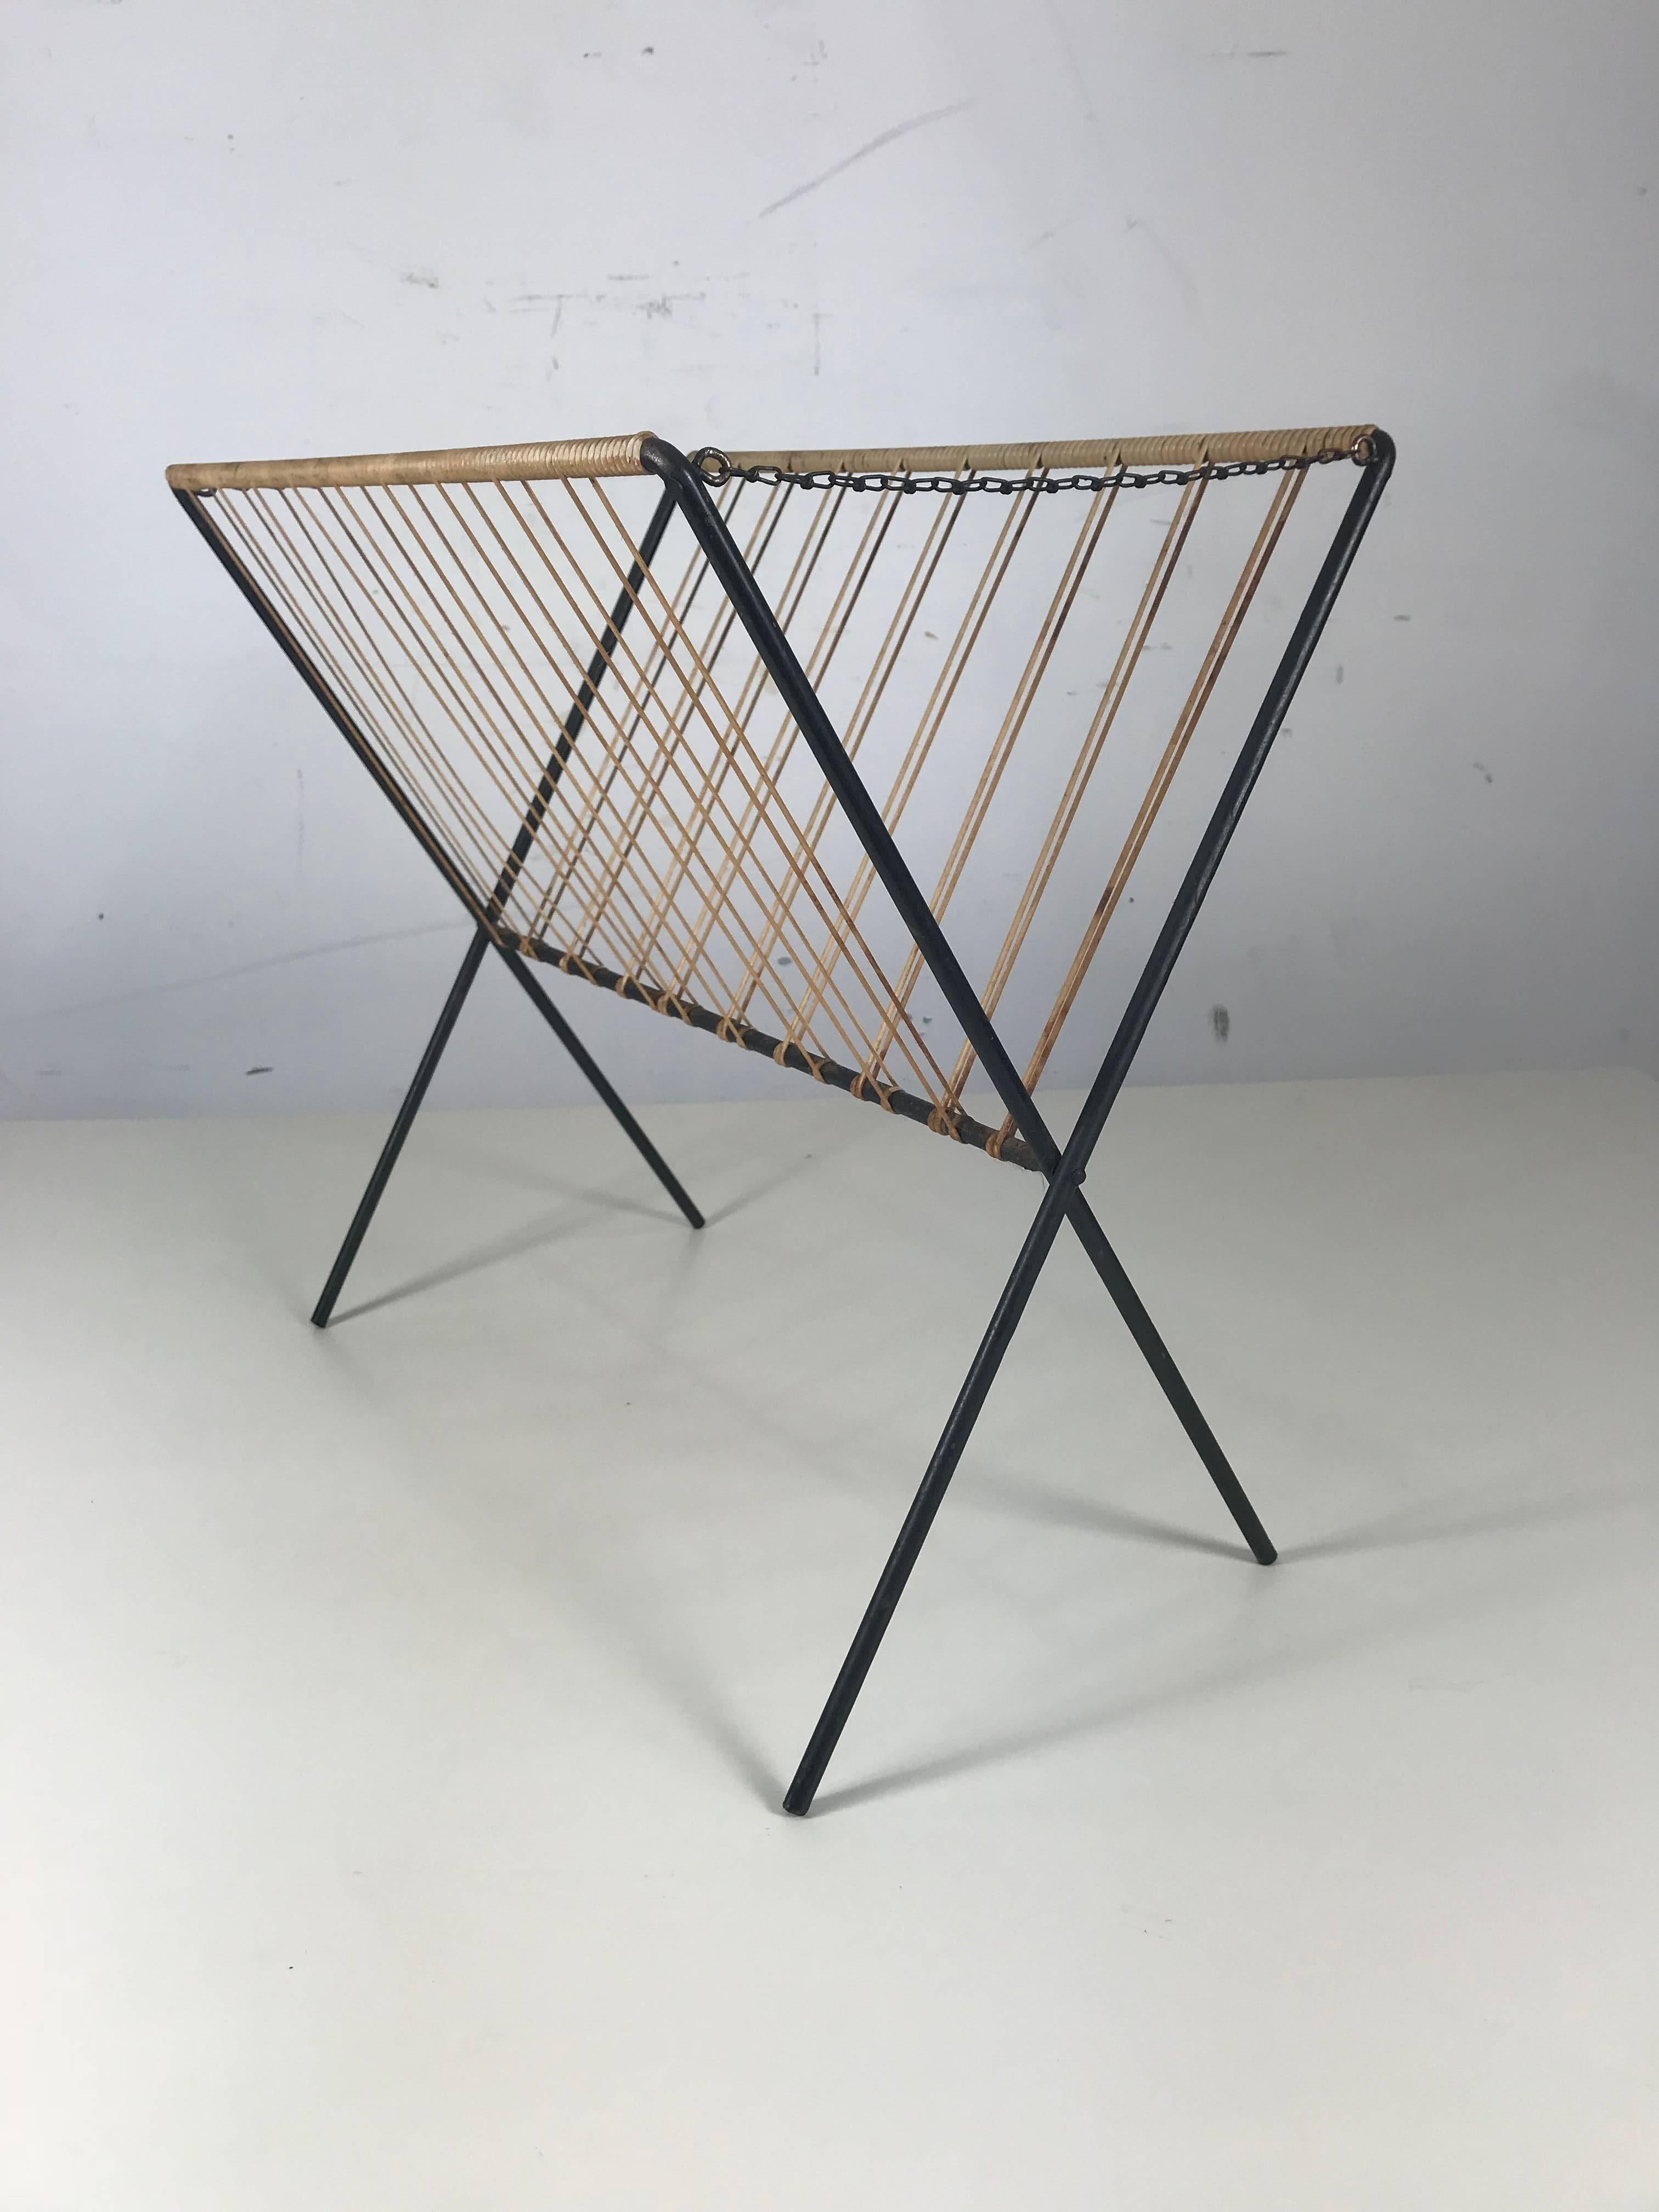 Modernist iron and jute folding magazine rack made by Tomado. Simple elegant styling.